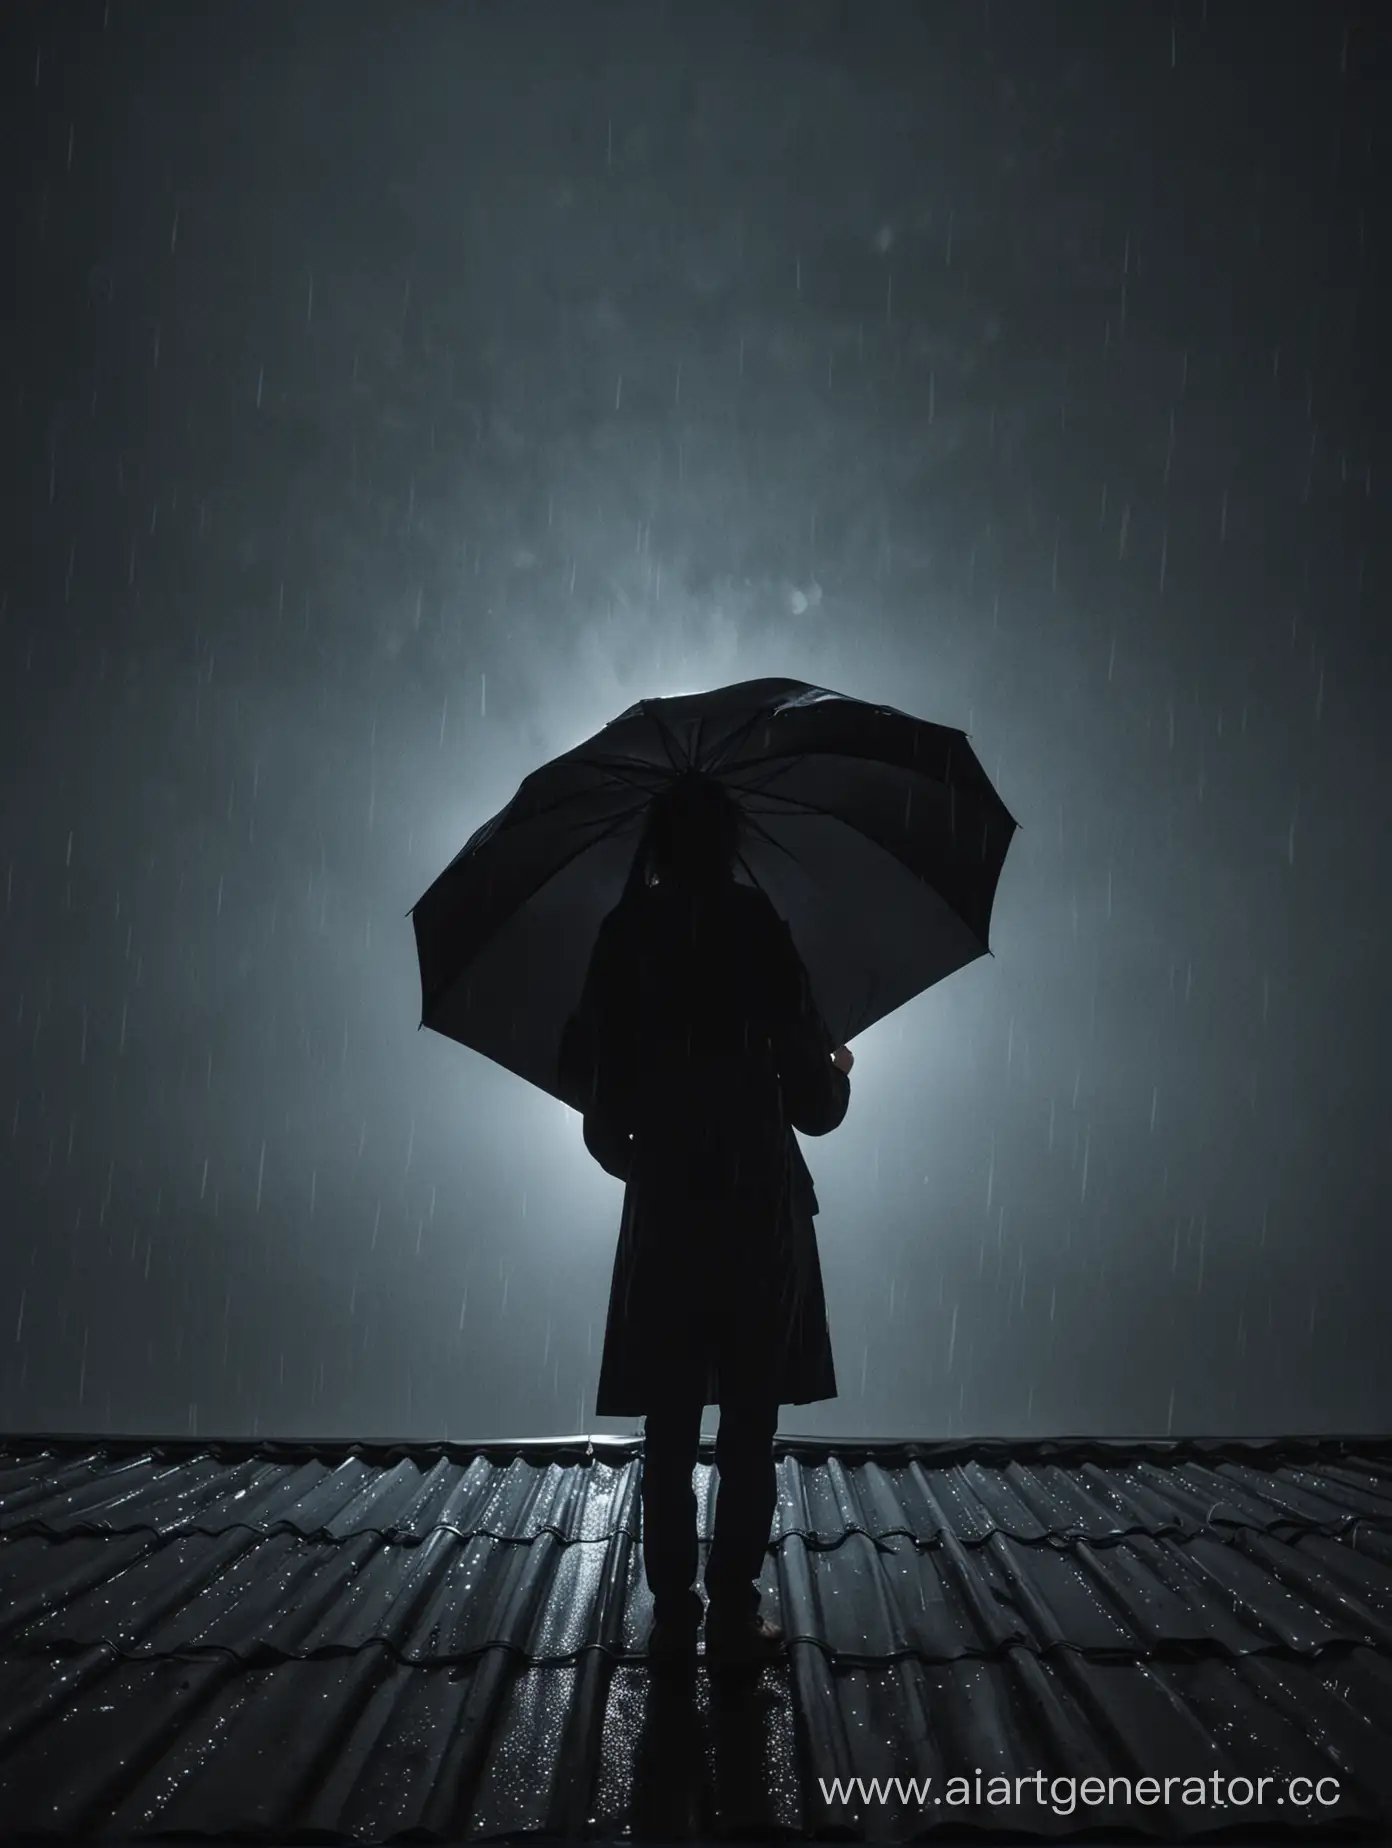 Solitary-Figure-Under-Black-Umbrella-on-Rooftop-in-Rainy-Night